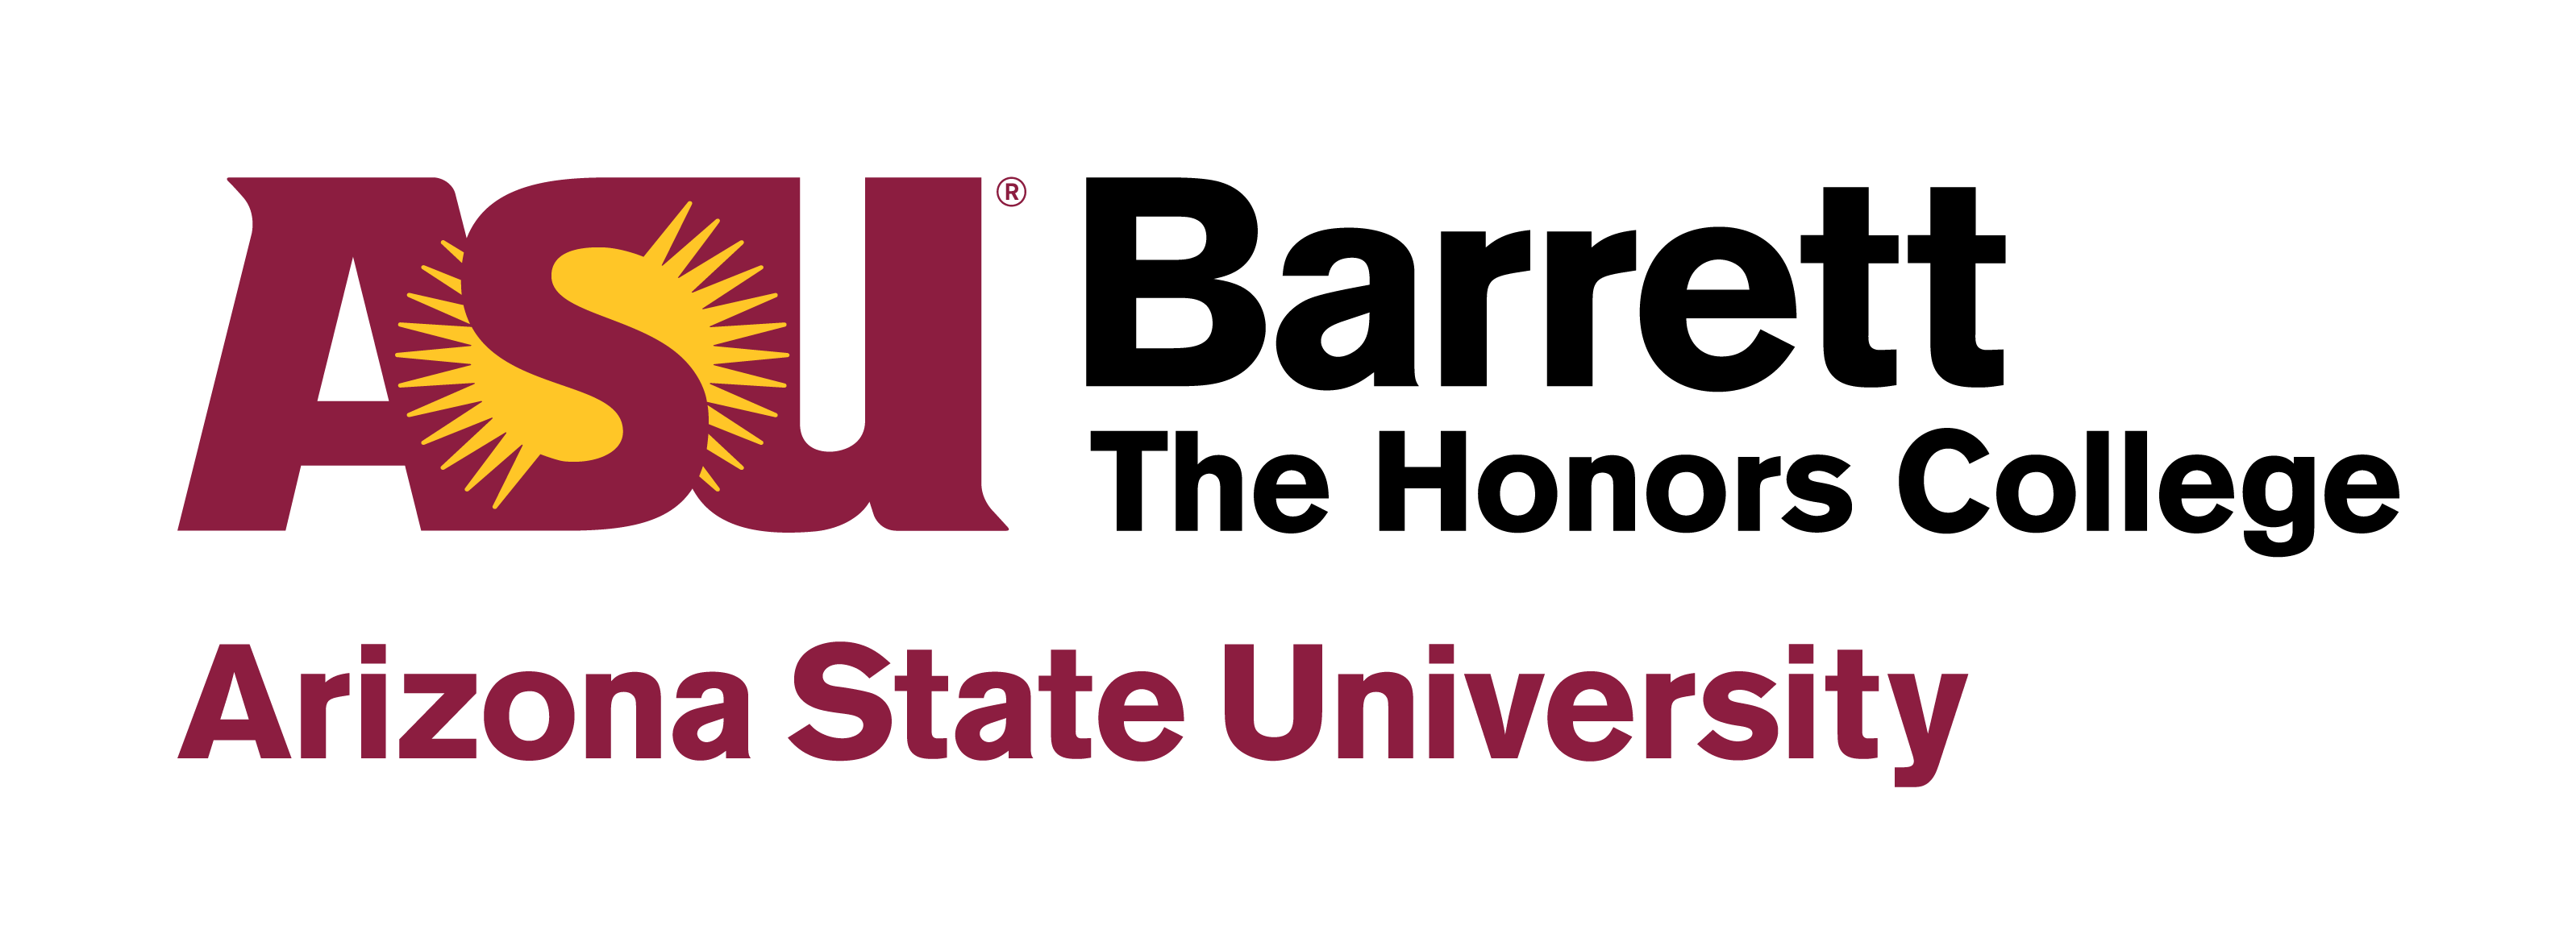 ASU Barrett The Honors College Logo